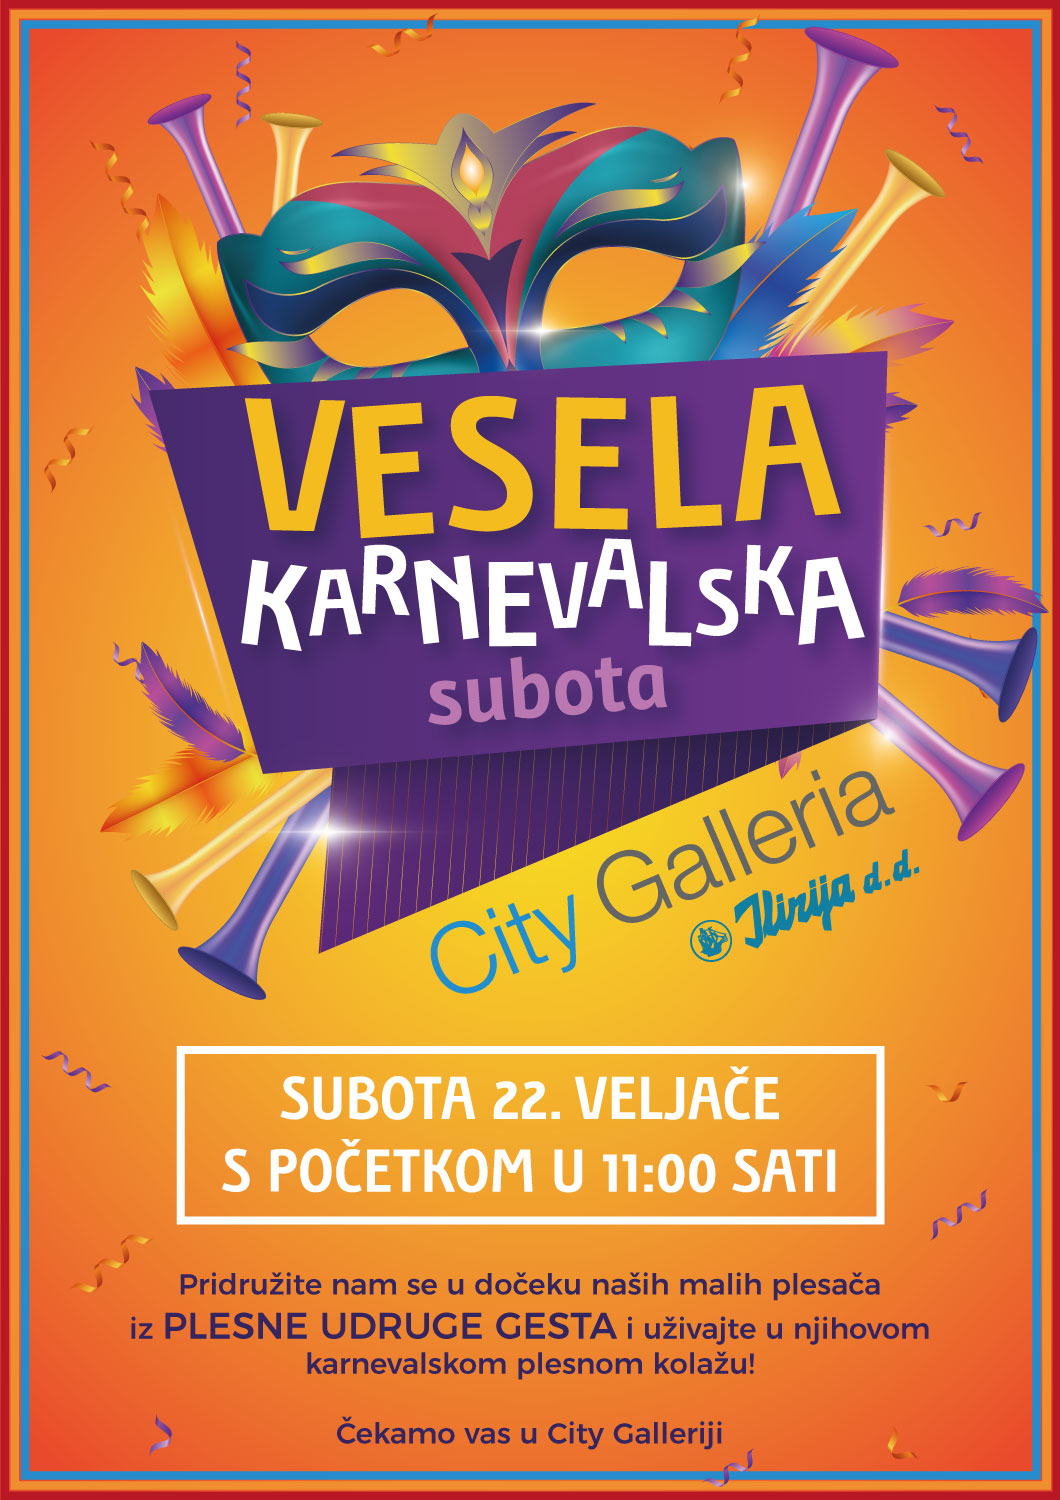 Vesela-karnevalska-subota-B1